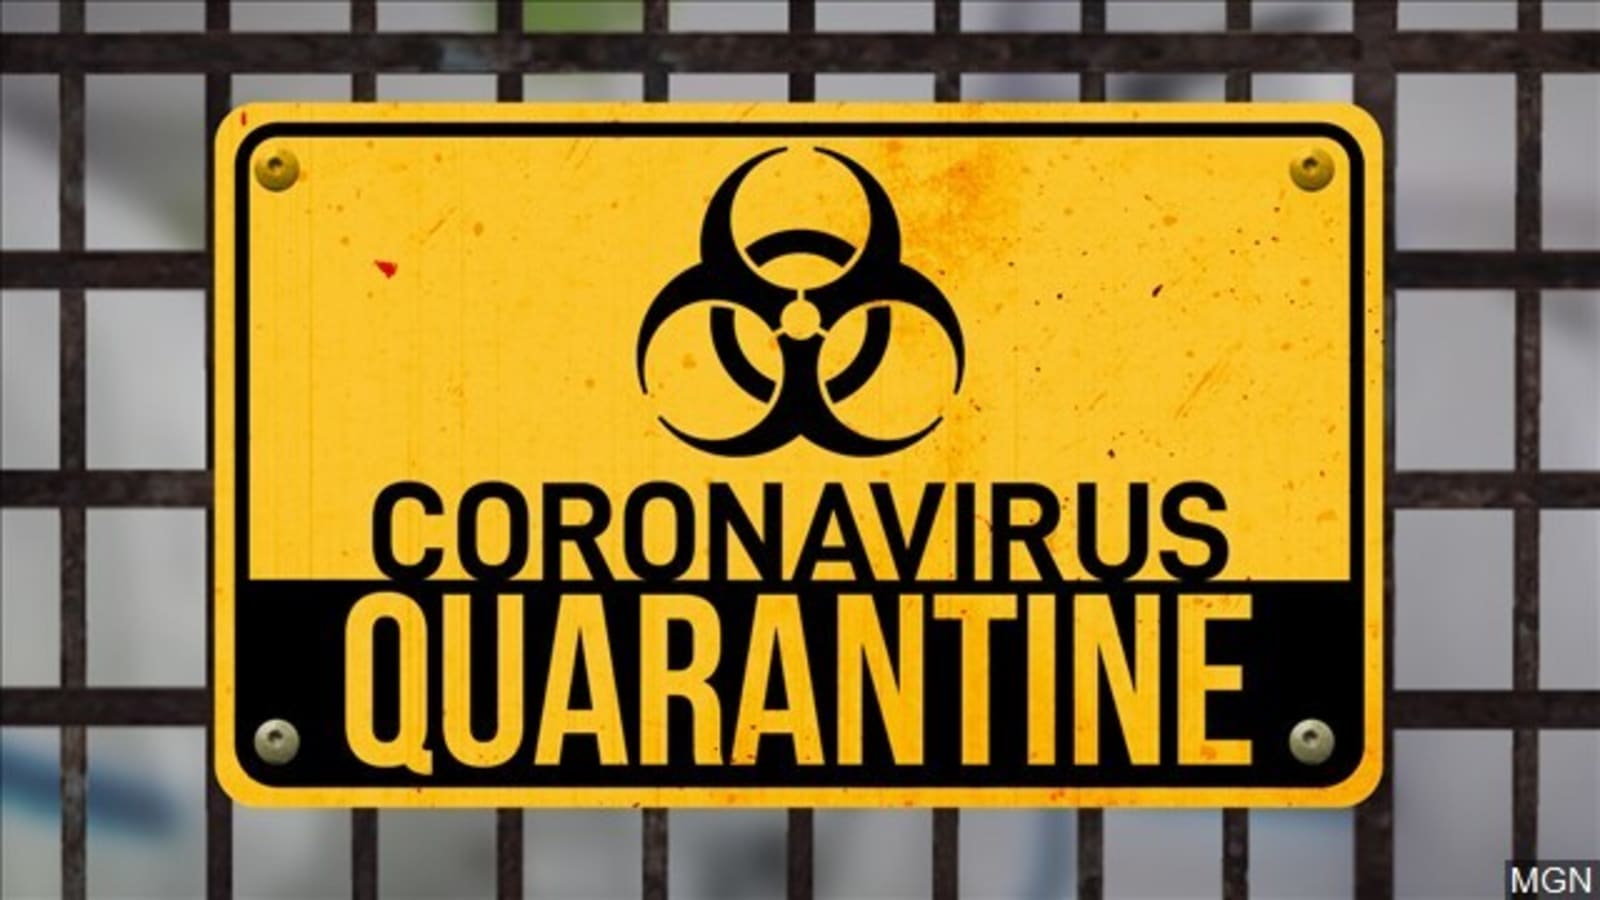 Free quarantine - Vector Art